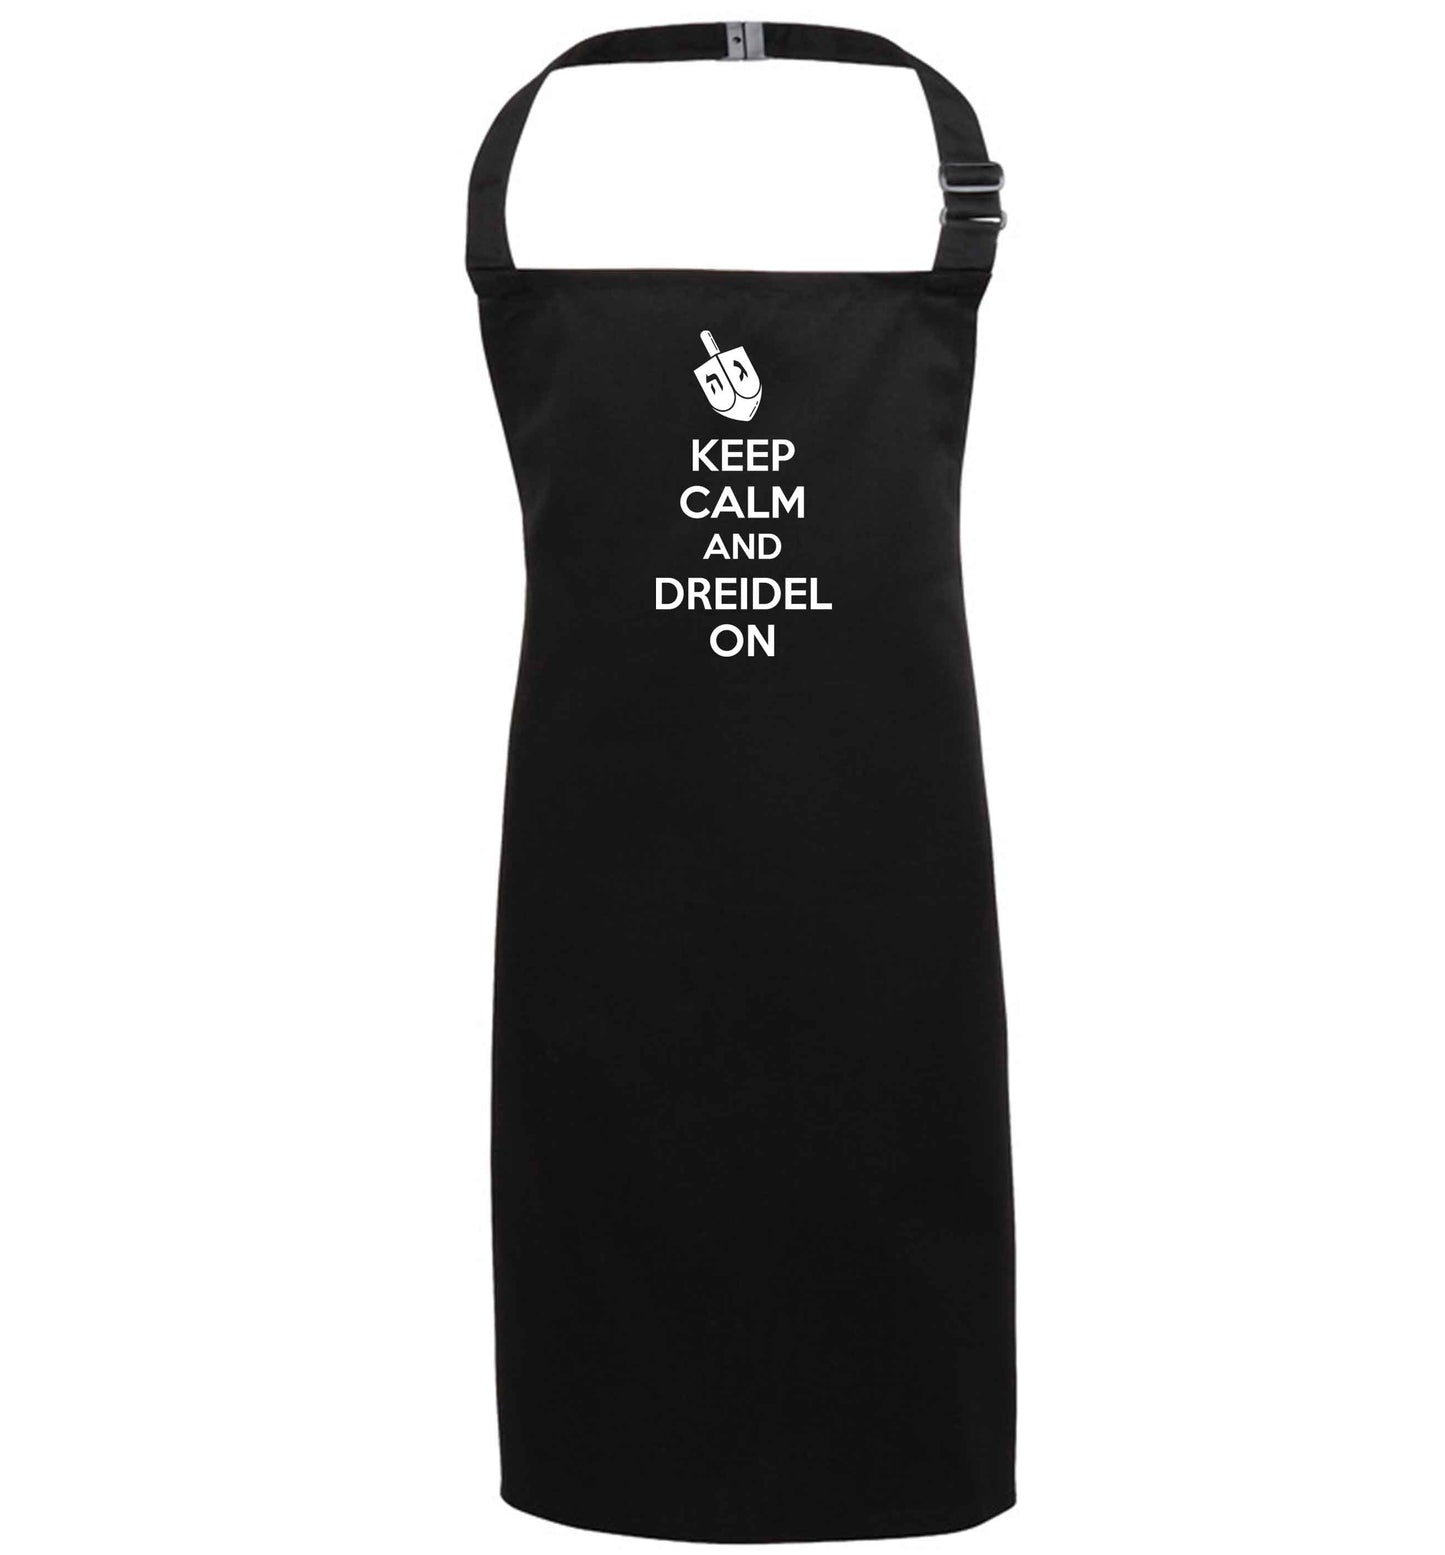 Keep calm and dreidel on black apron 7-10 years